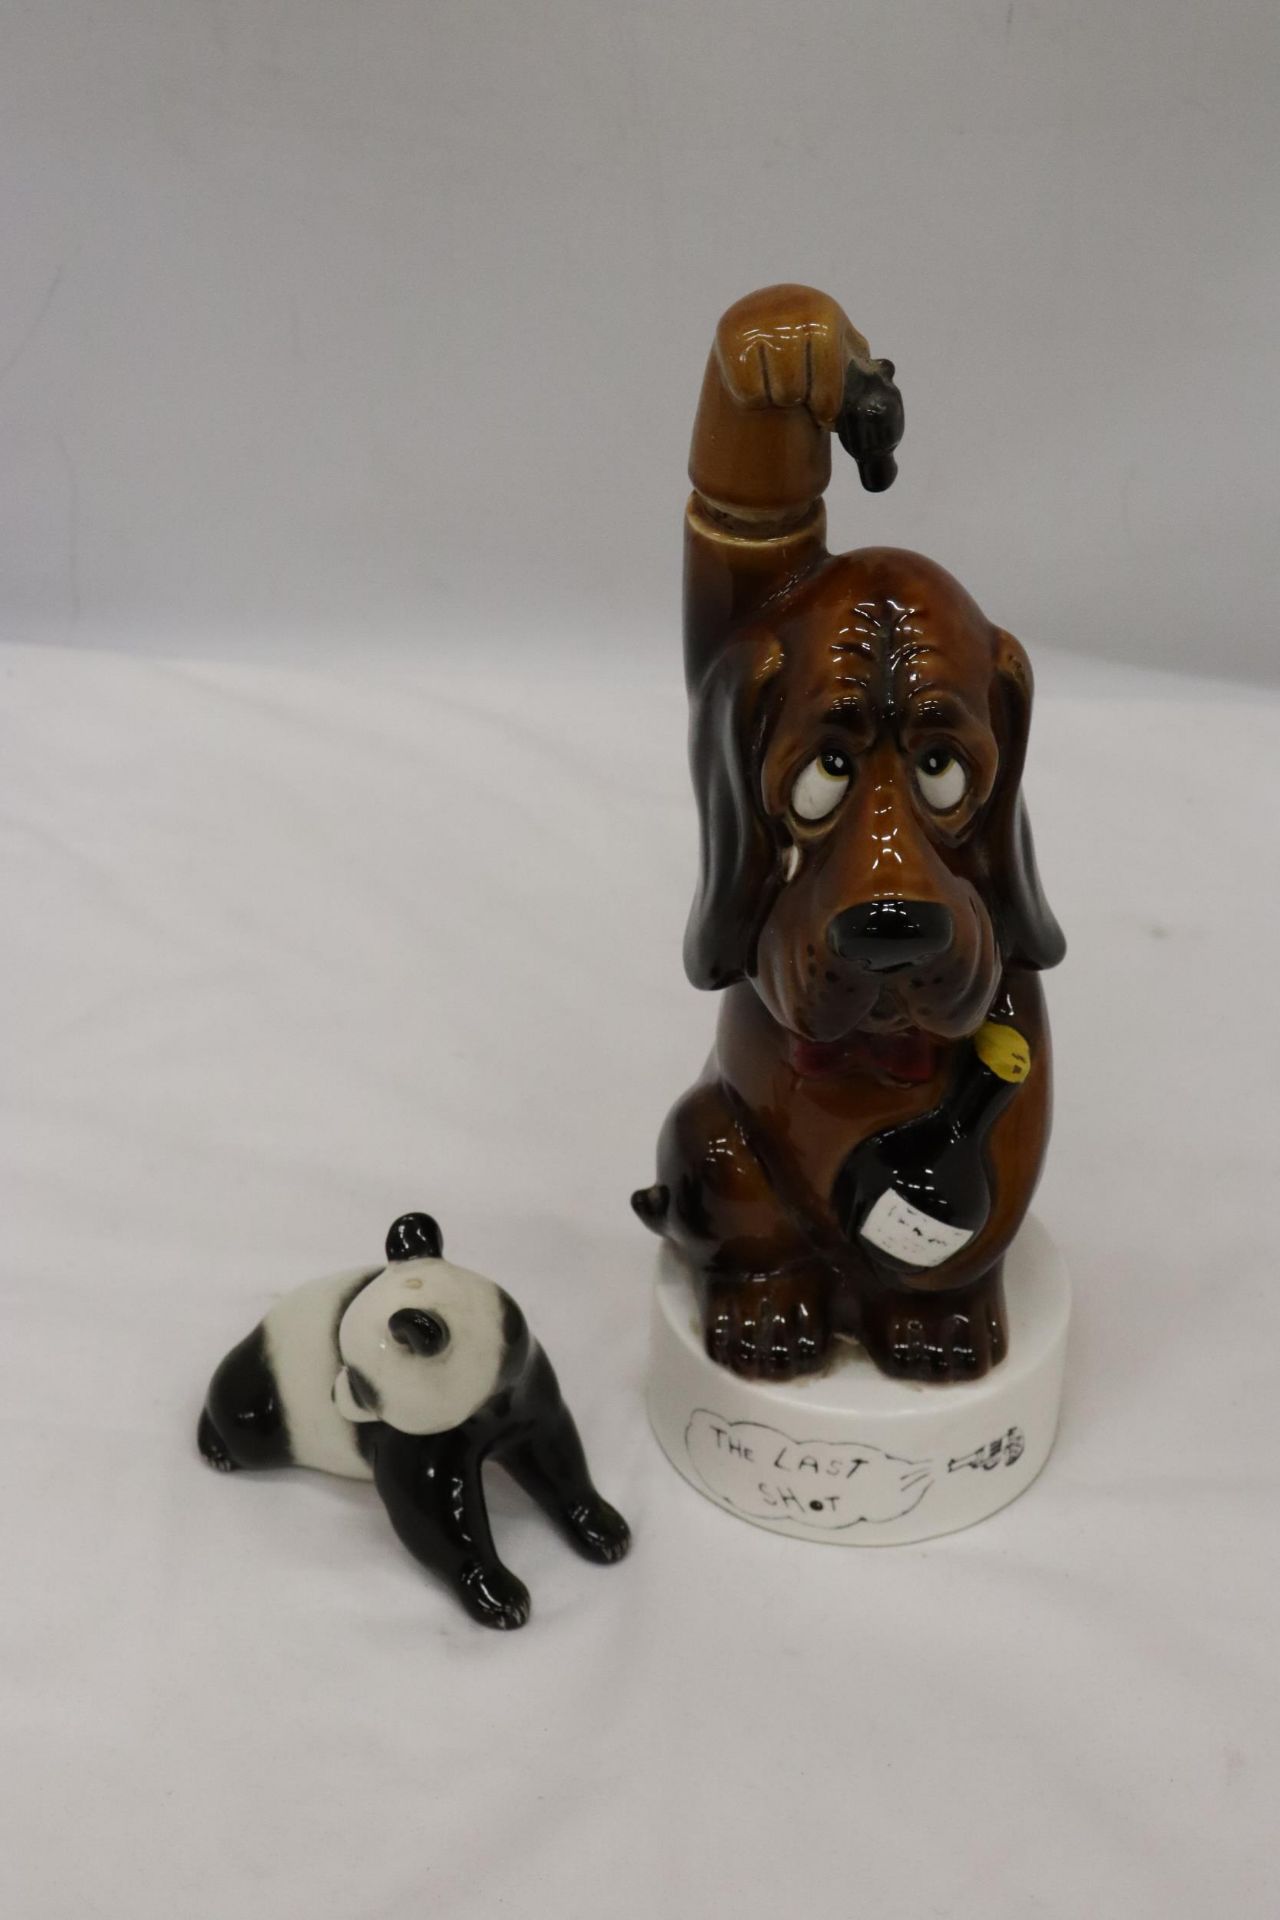 A LOMONOSOV PANDA AND 'THE LAST SHOT' DOG FIGURINE - Image 5 of 5